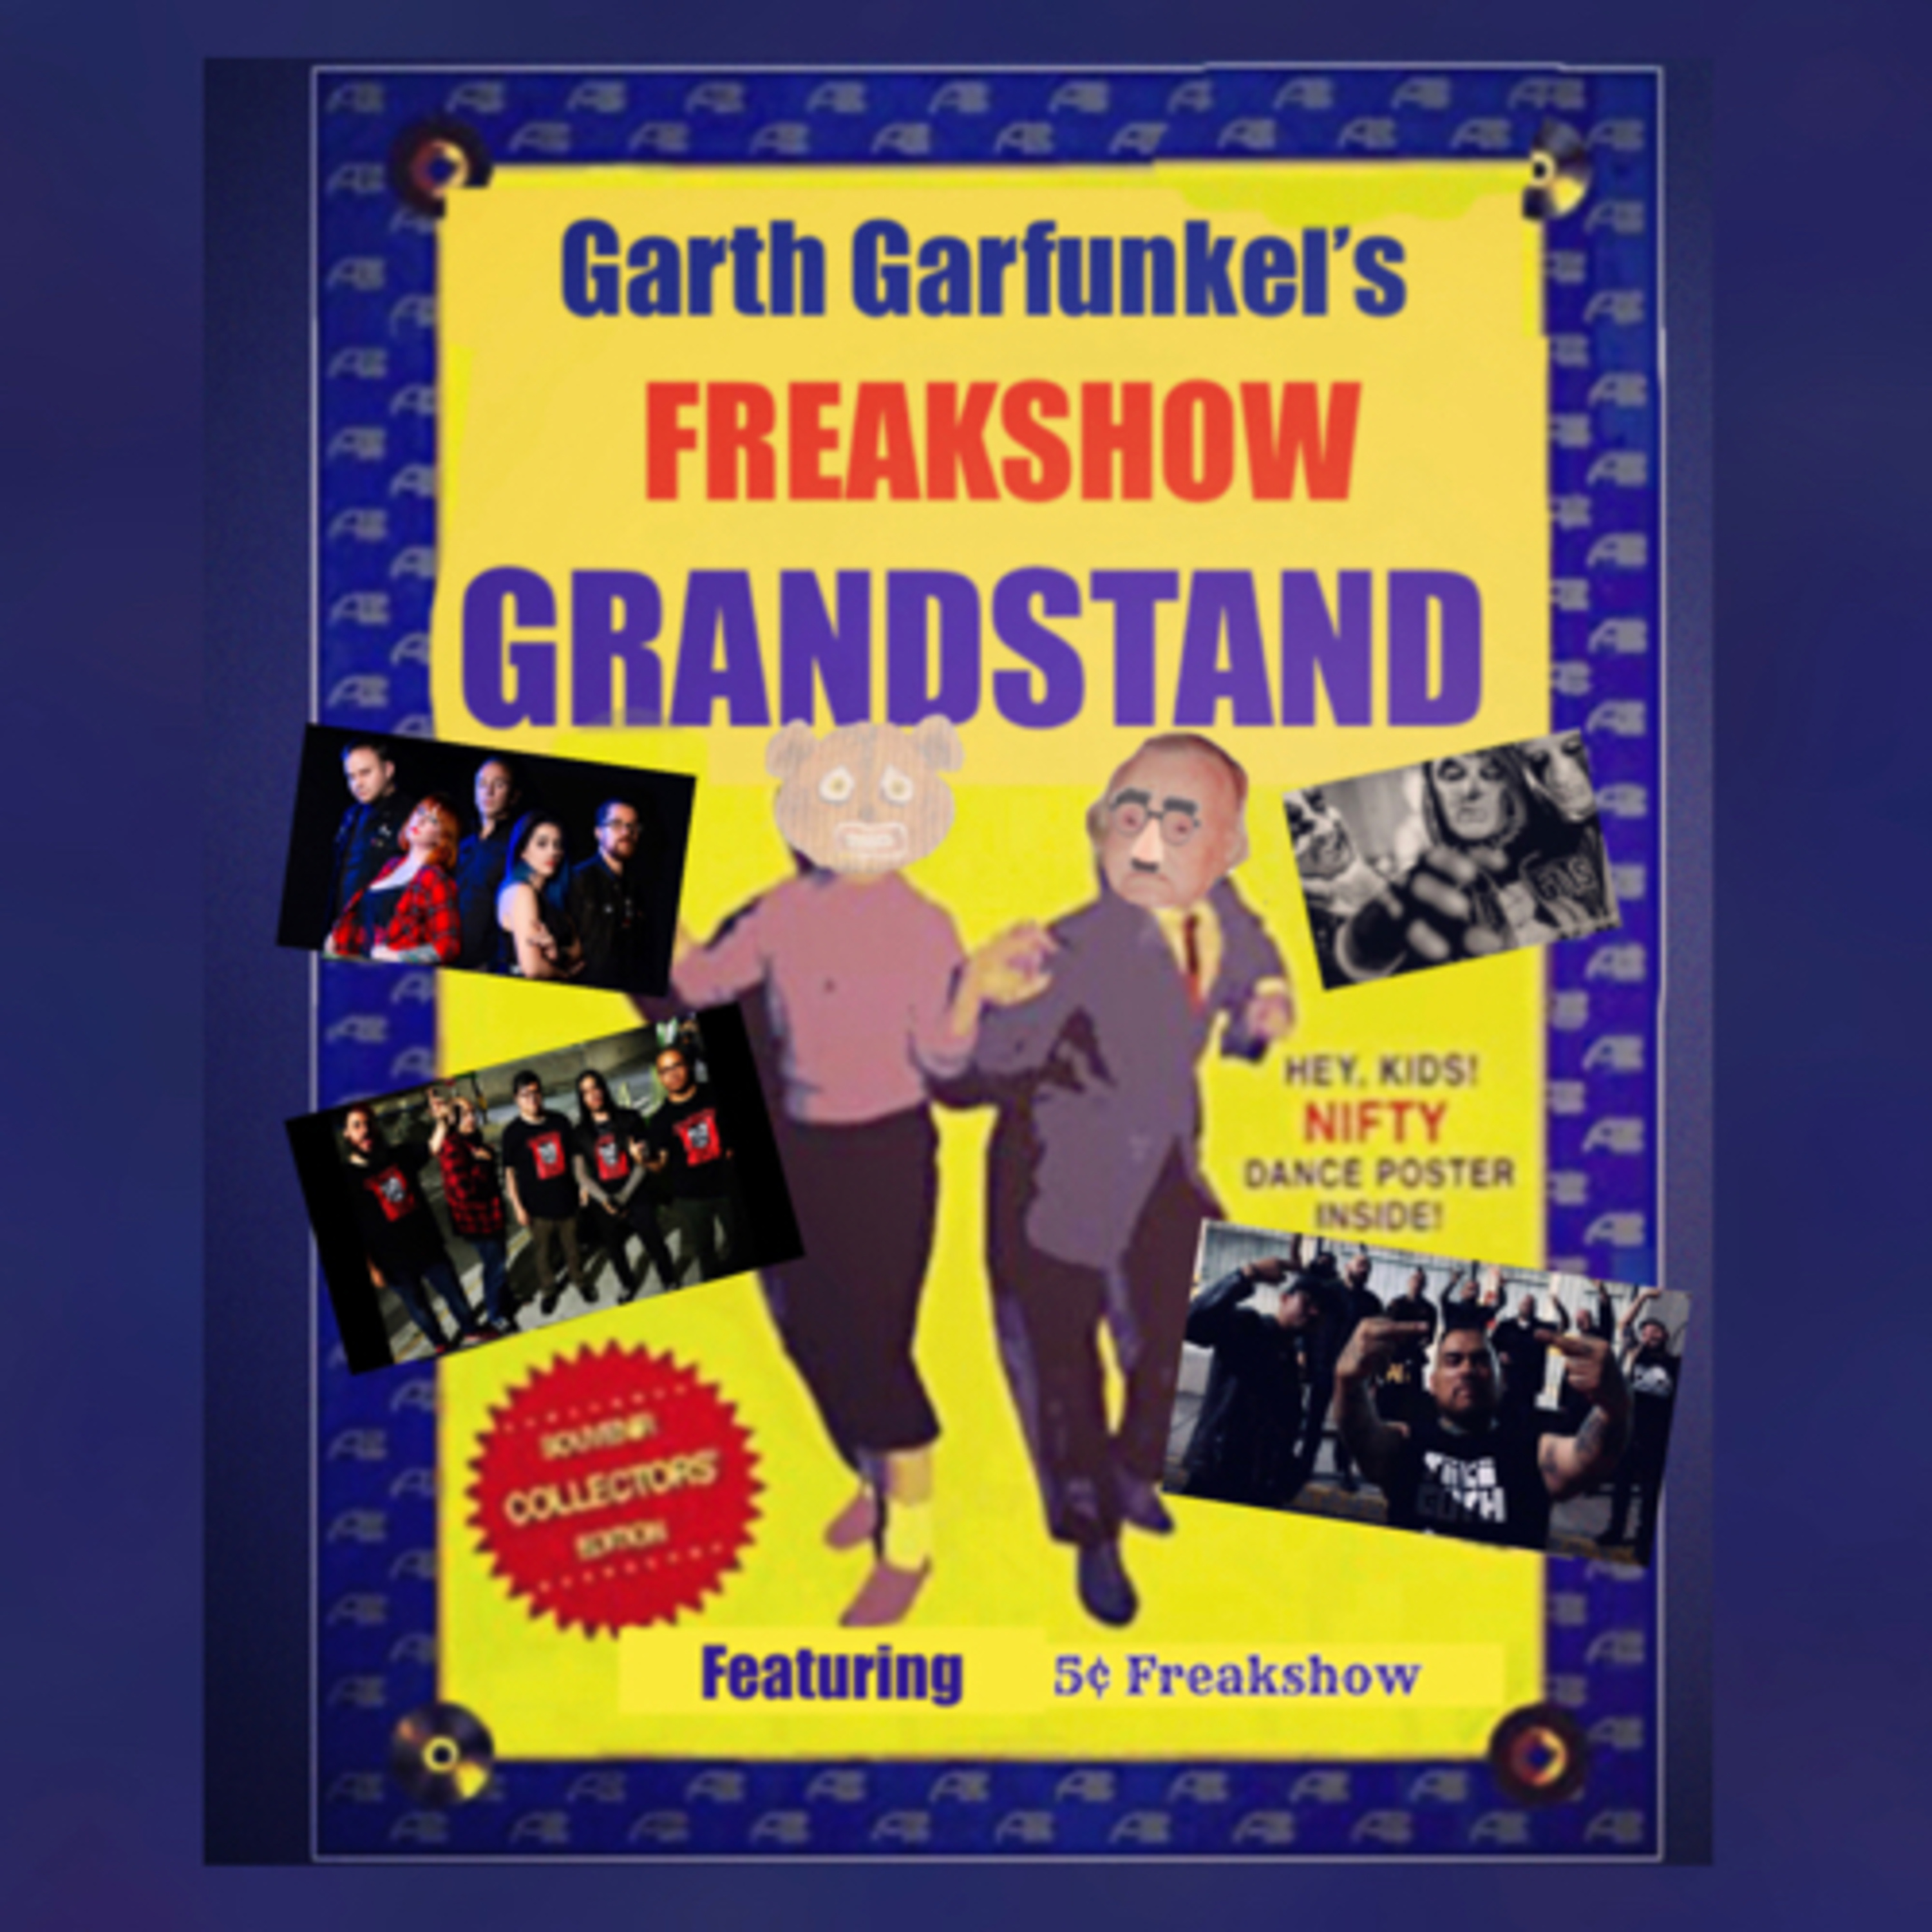 Garth Garfunkel’s Freakshow Grandstand ep2